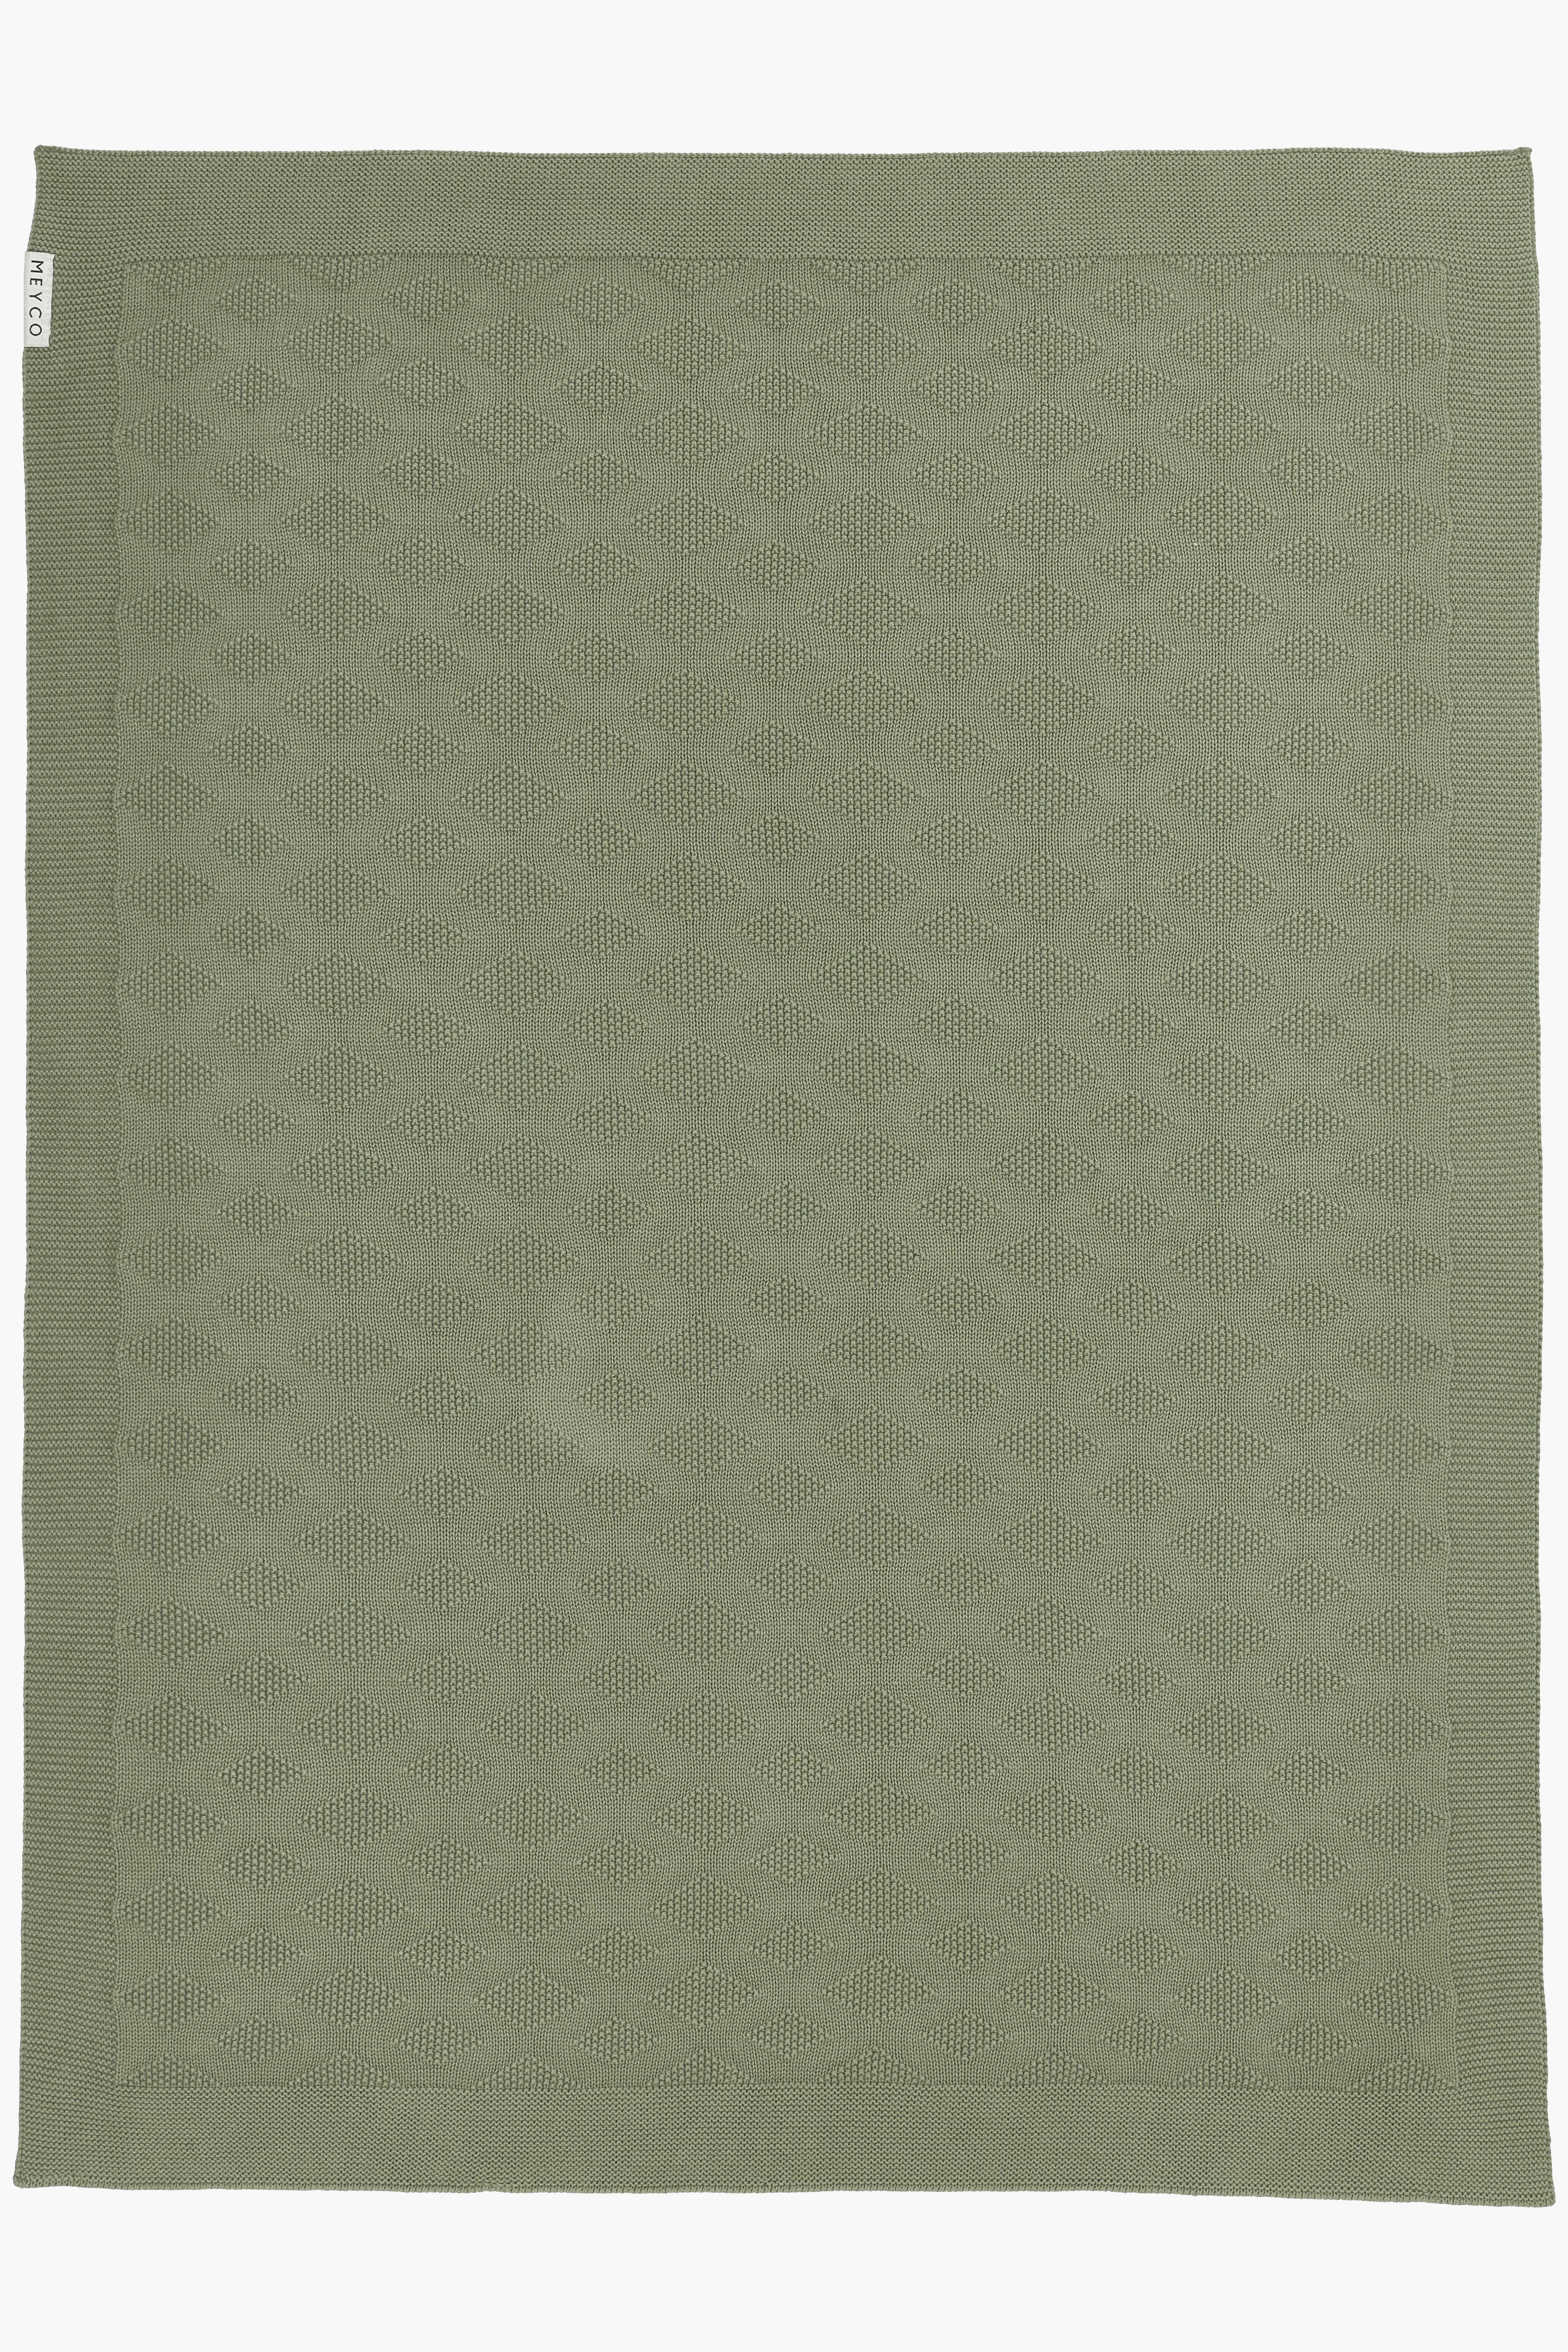 Cot bed blanket biological Diamond - forest green - 100x150cm